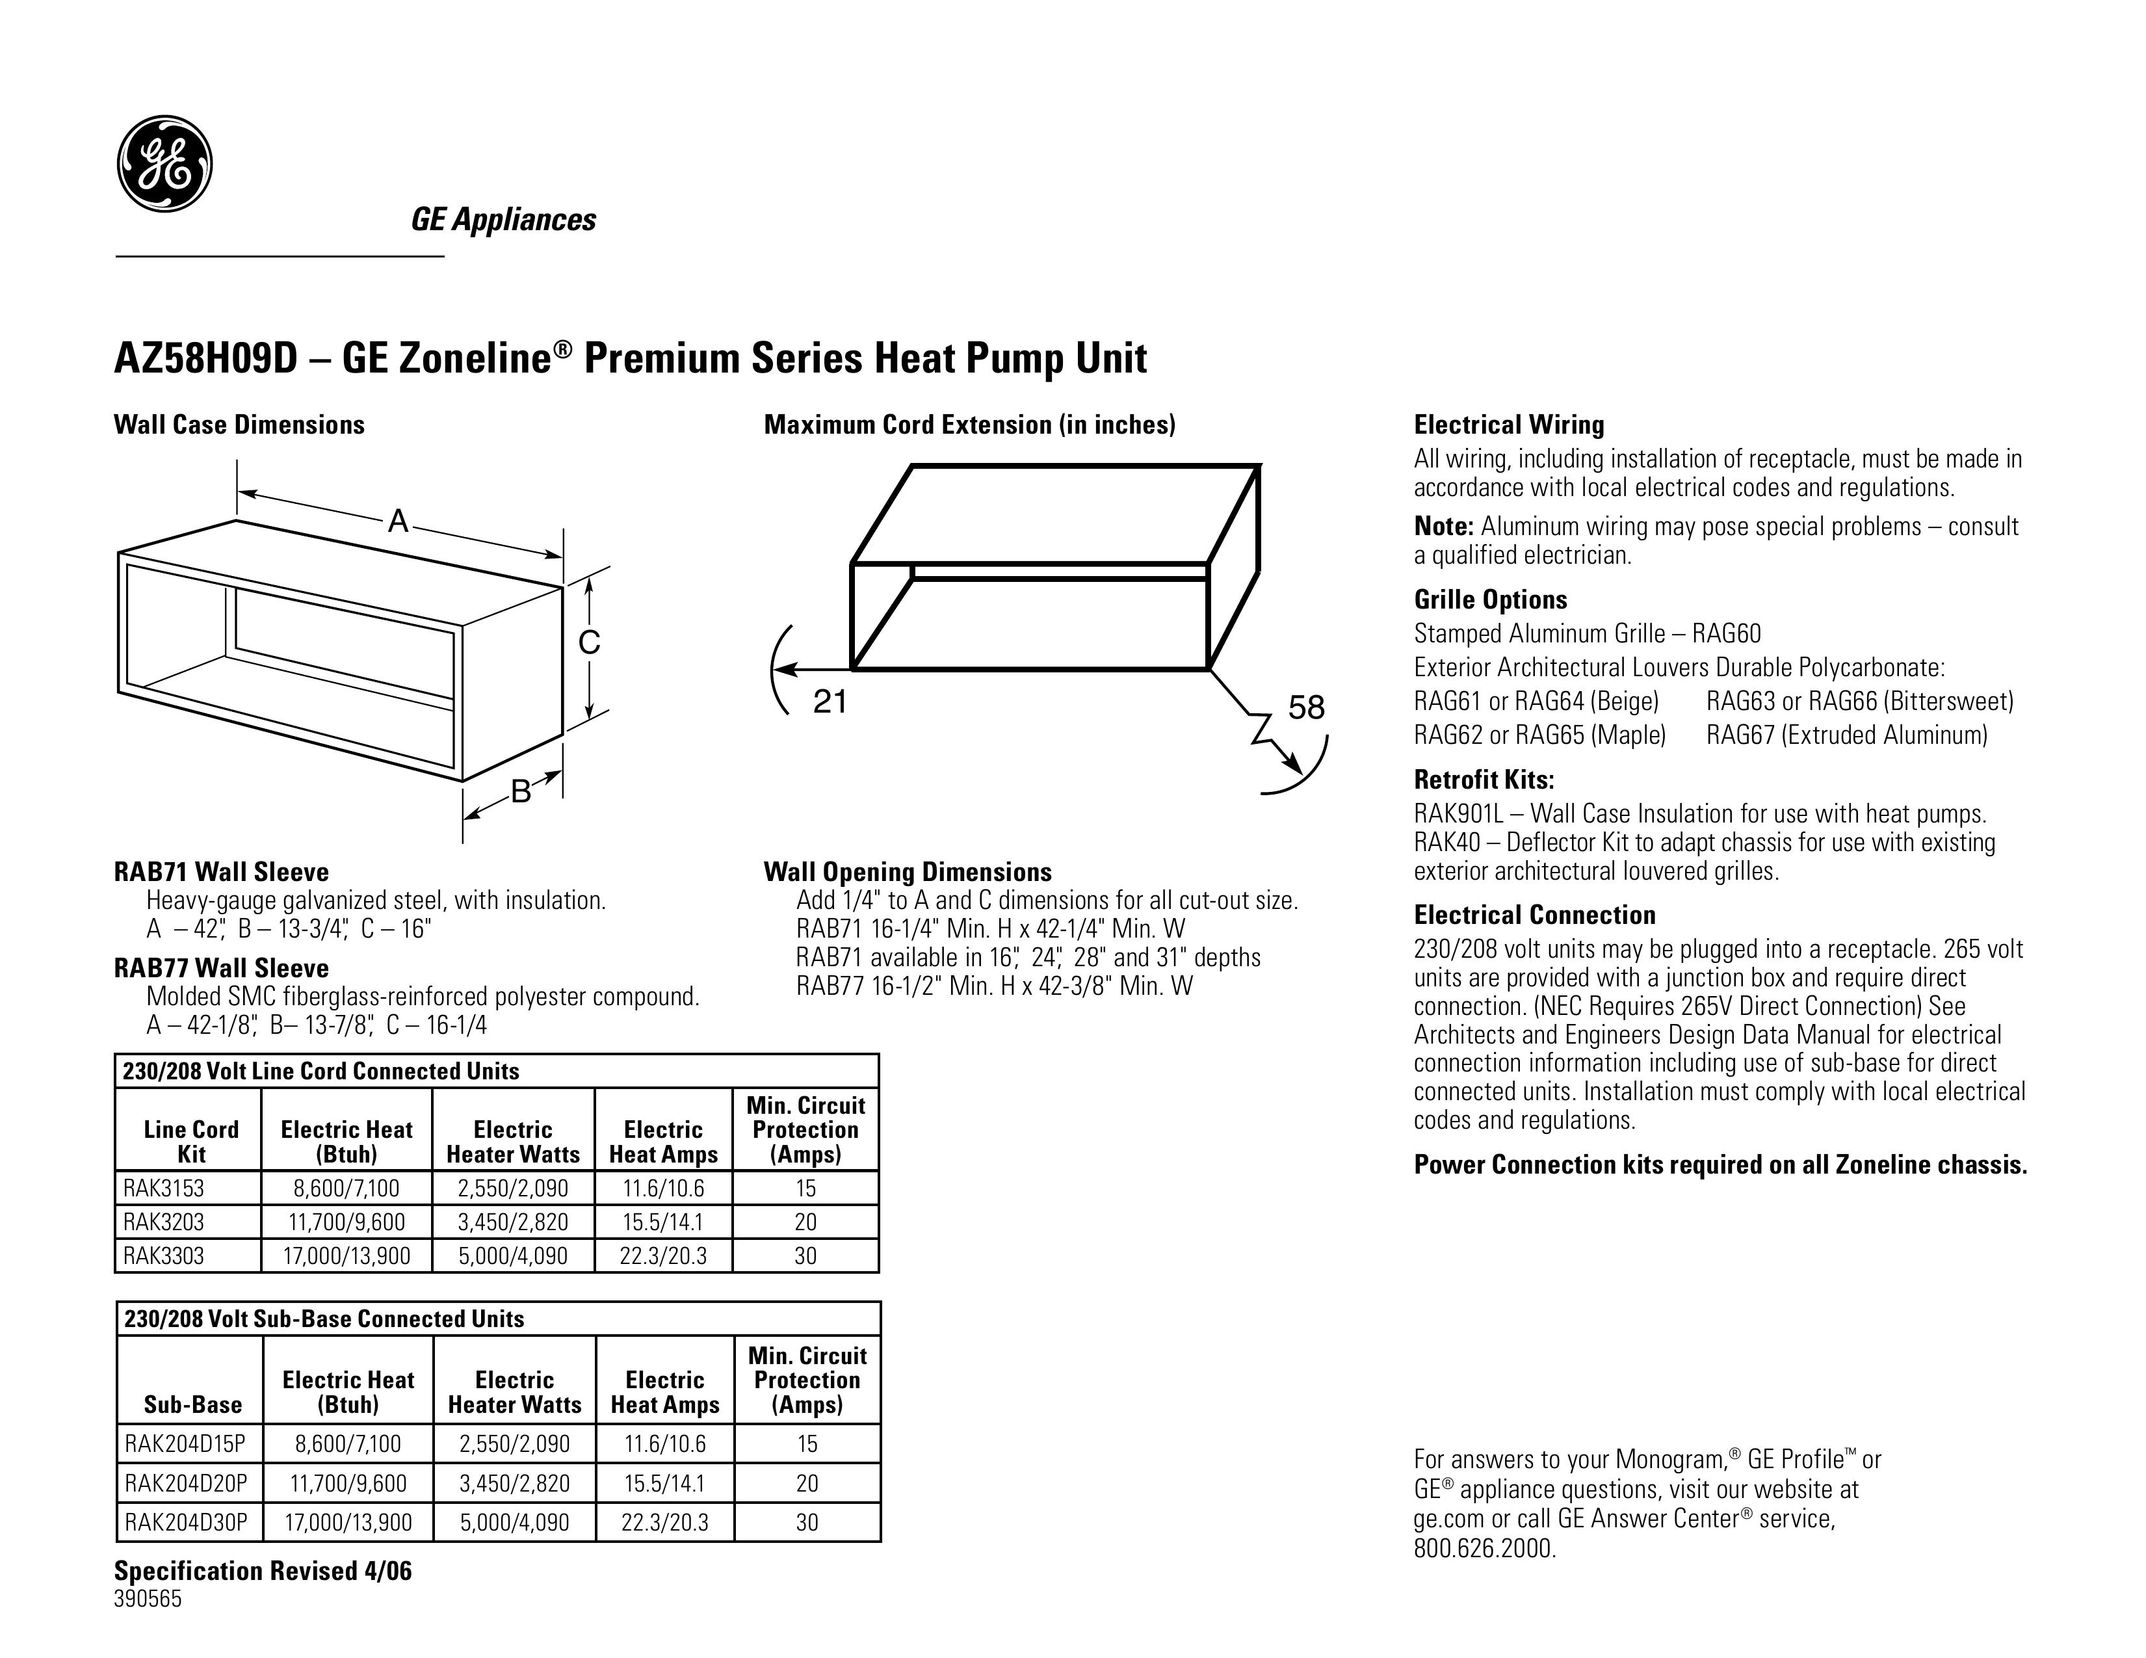 GE AZ58H09D Heat Pump User Manual